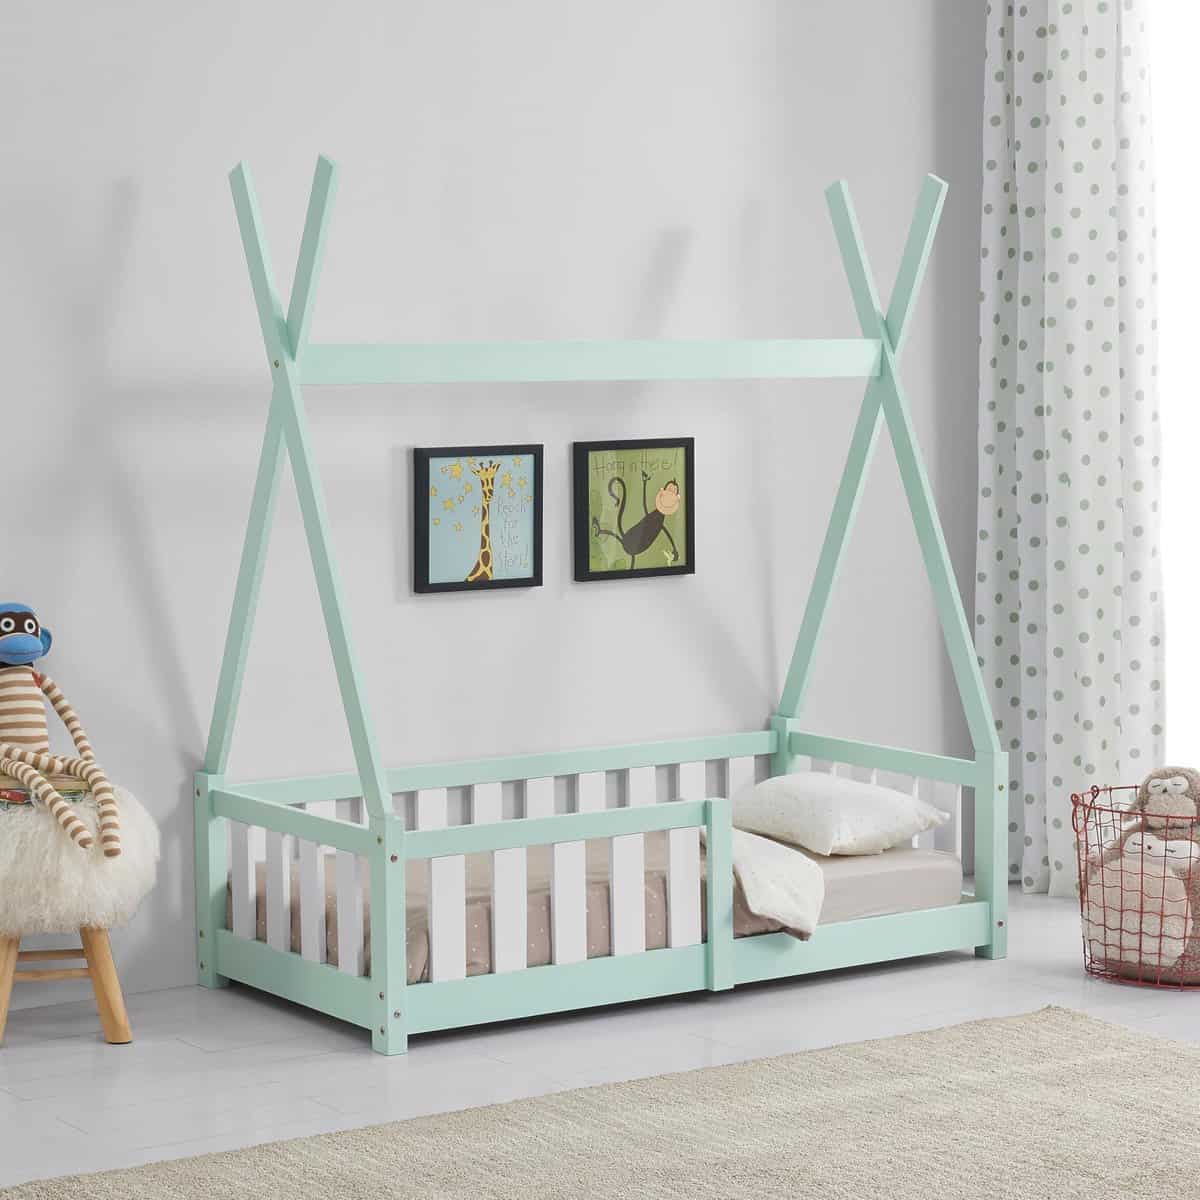 Best-crib-toddler-bed-cot-tipi-pine